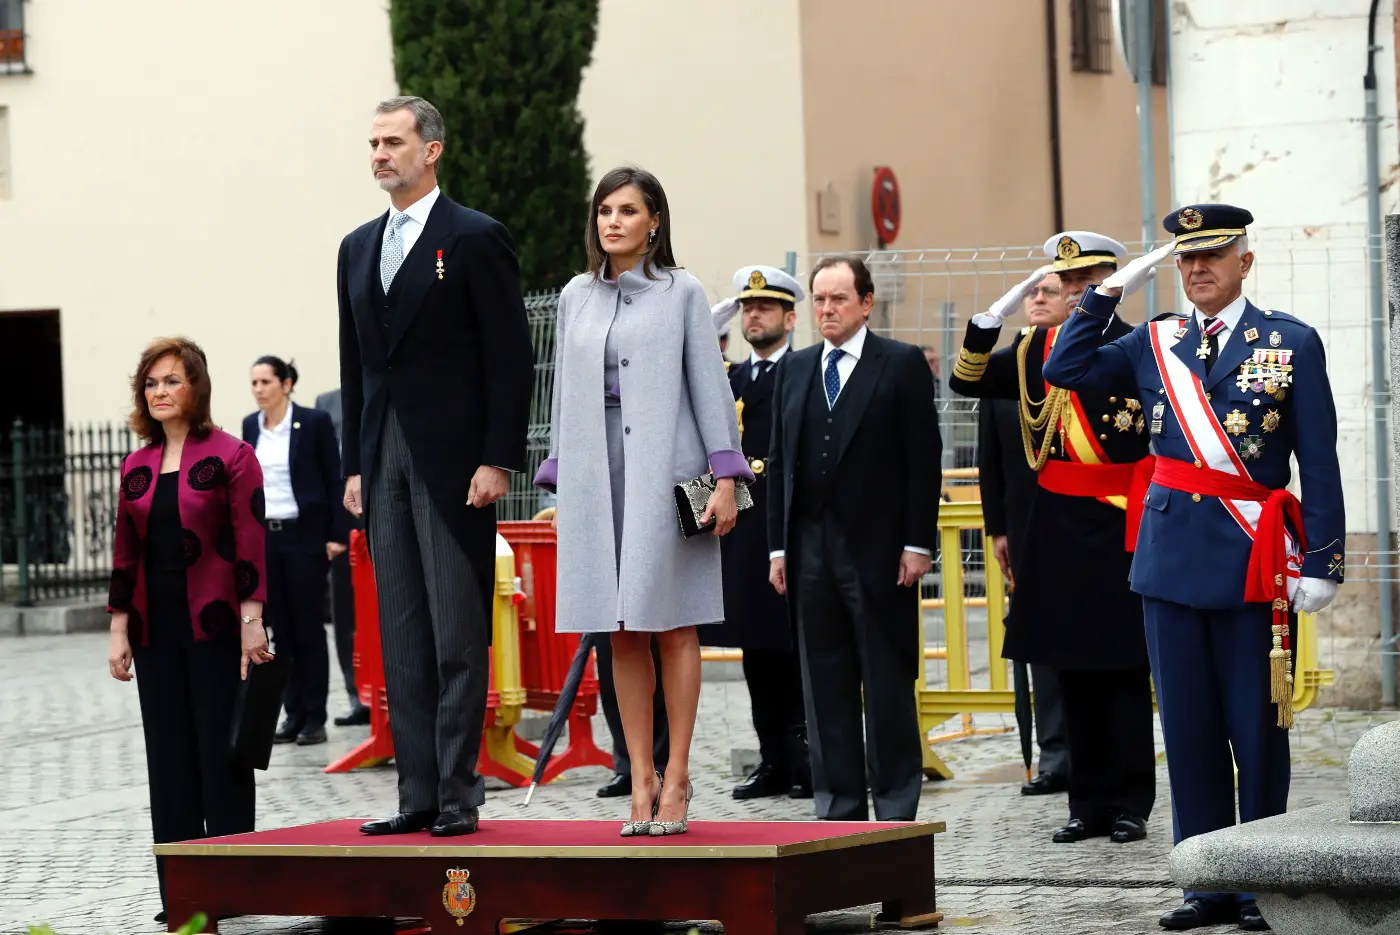 King Felipe and Queen Letizia presented the Literature Award